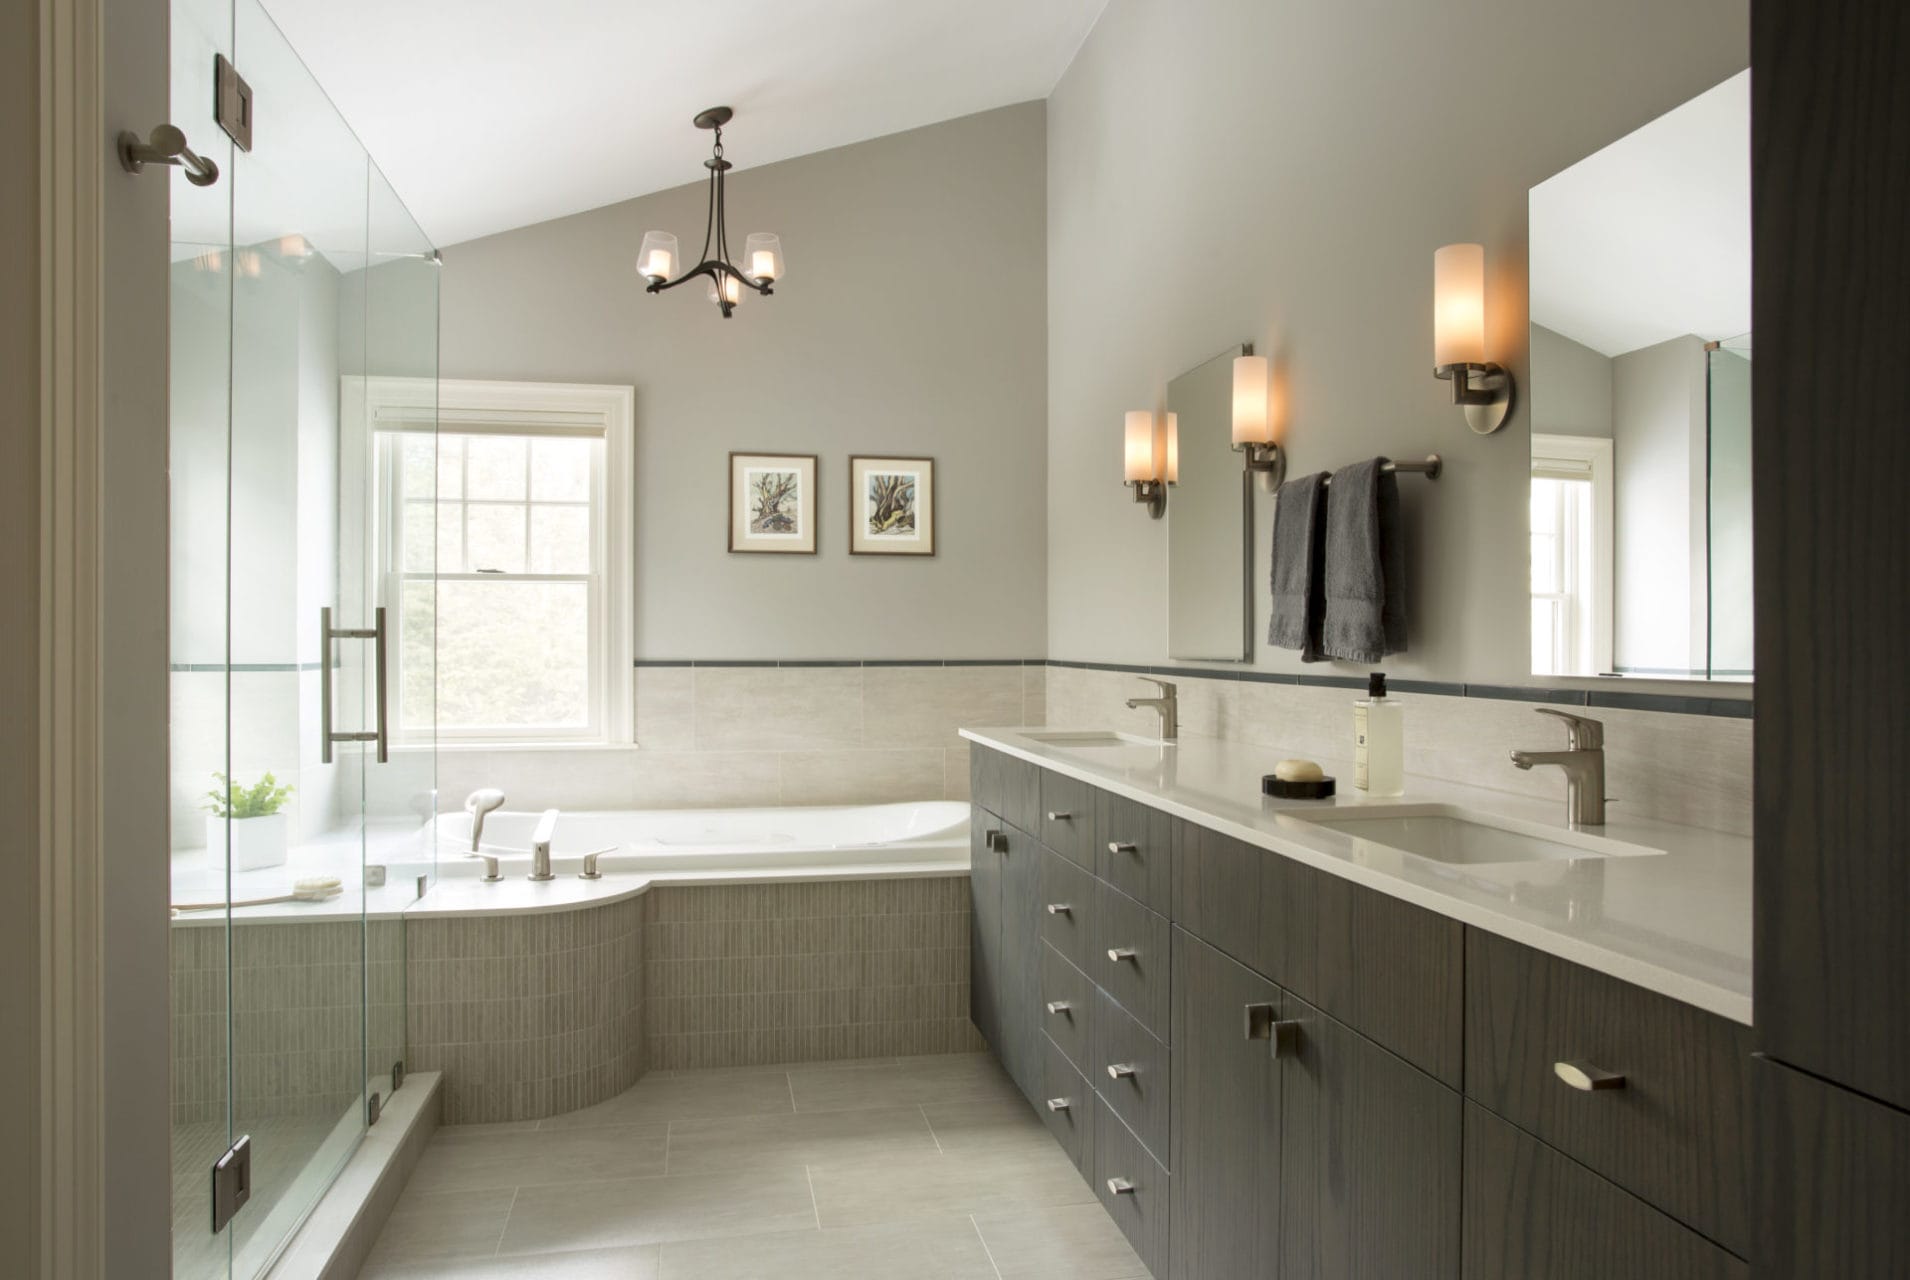 4 Stunning Master Bathroom Layout Ideas, Master Bathroom Layout